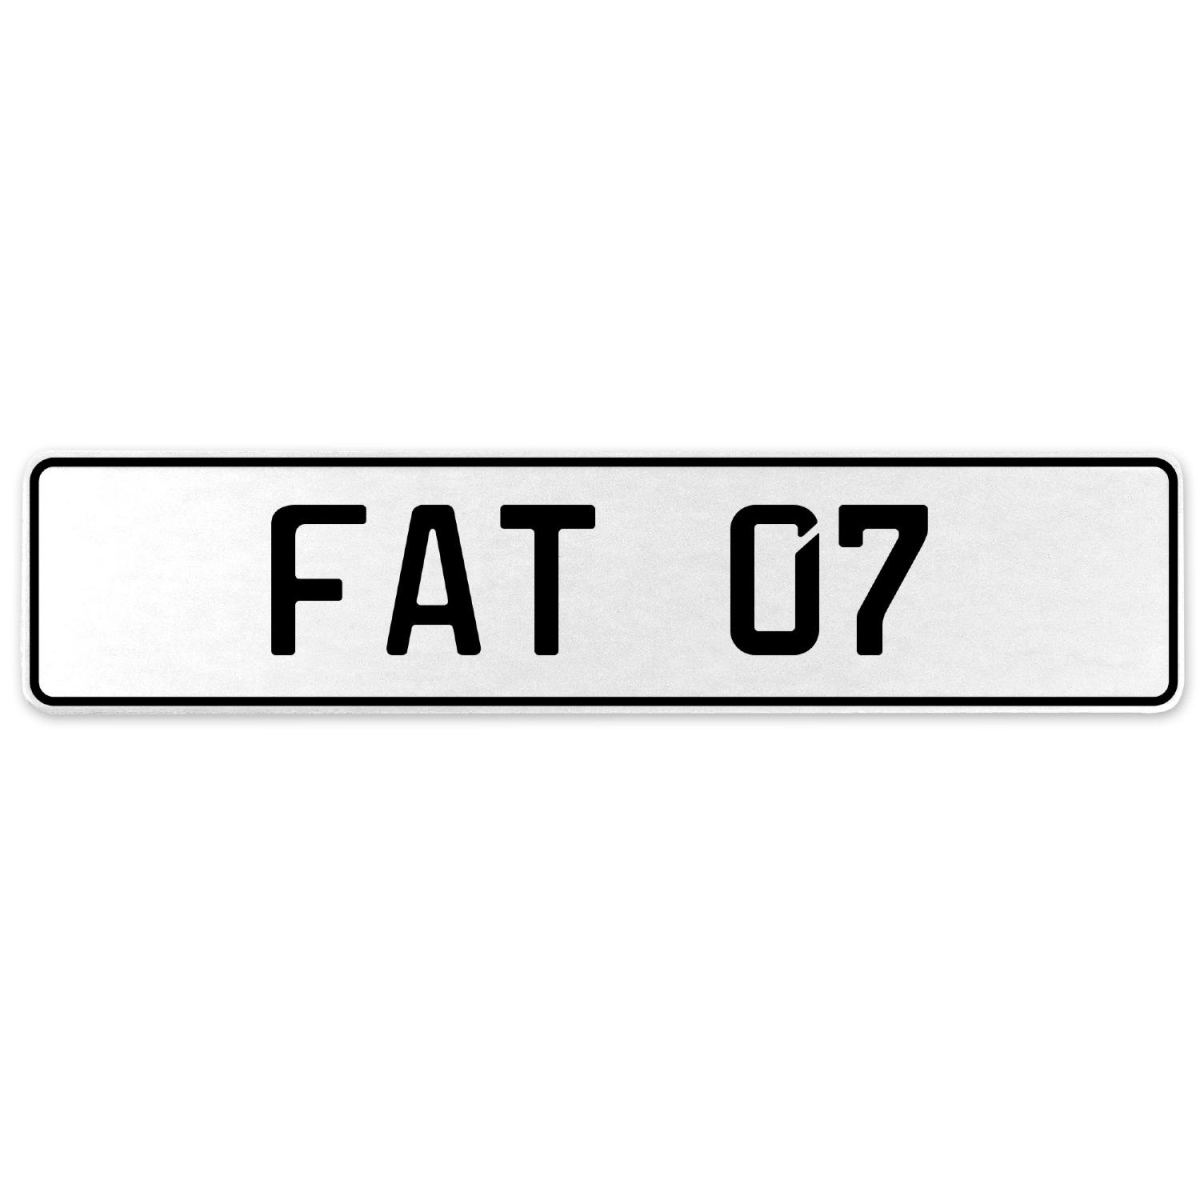 554505 Fat 07 - White Aluminum Street Sign Mancave Euro Plate Name Door Sign Wall Art